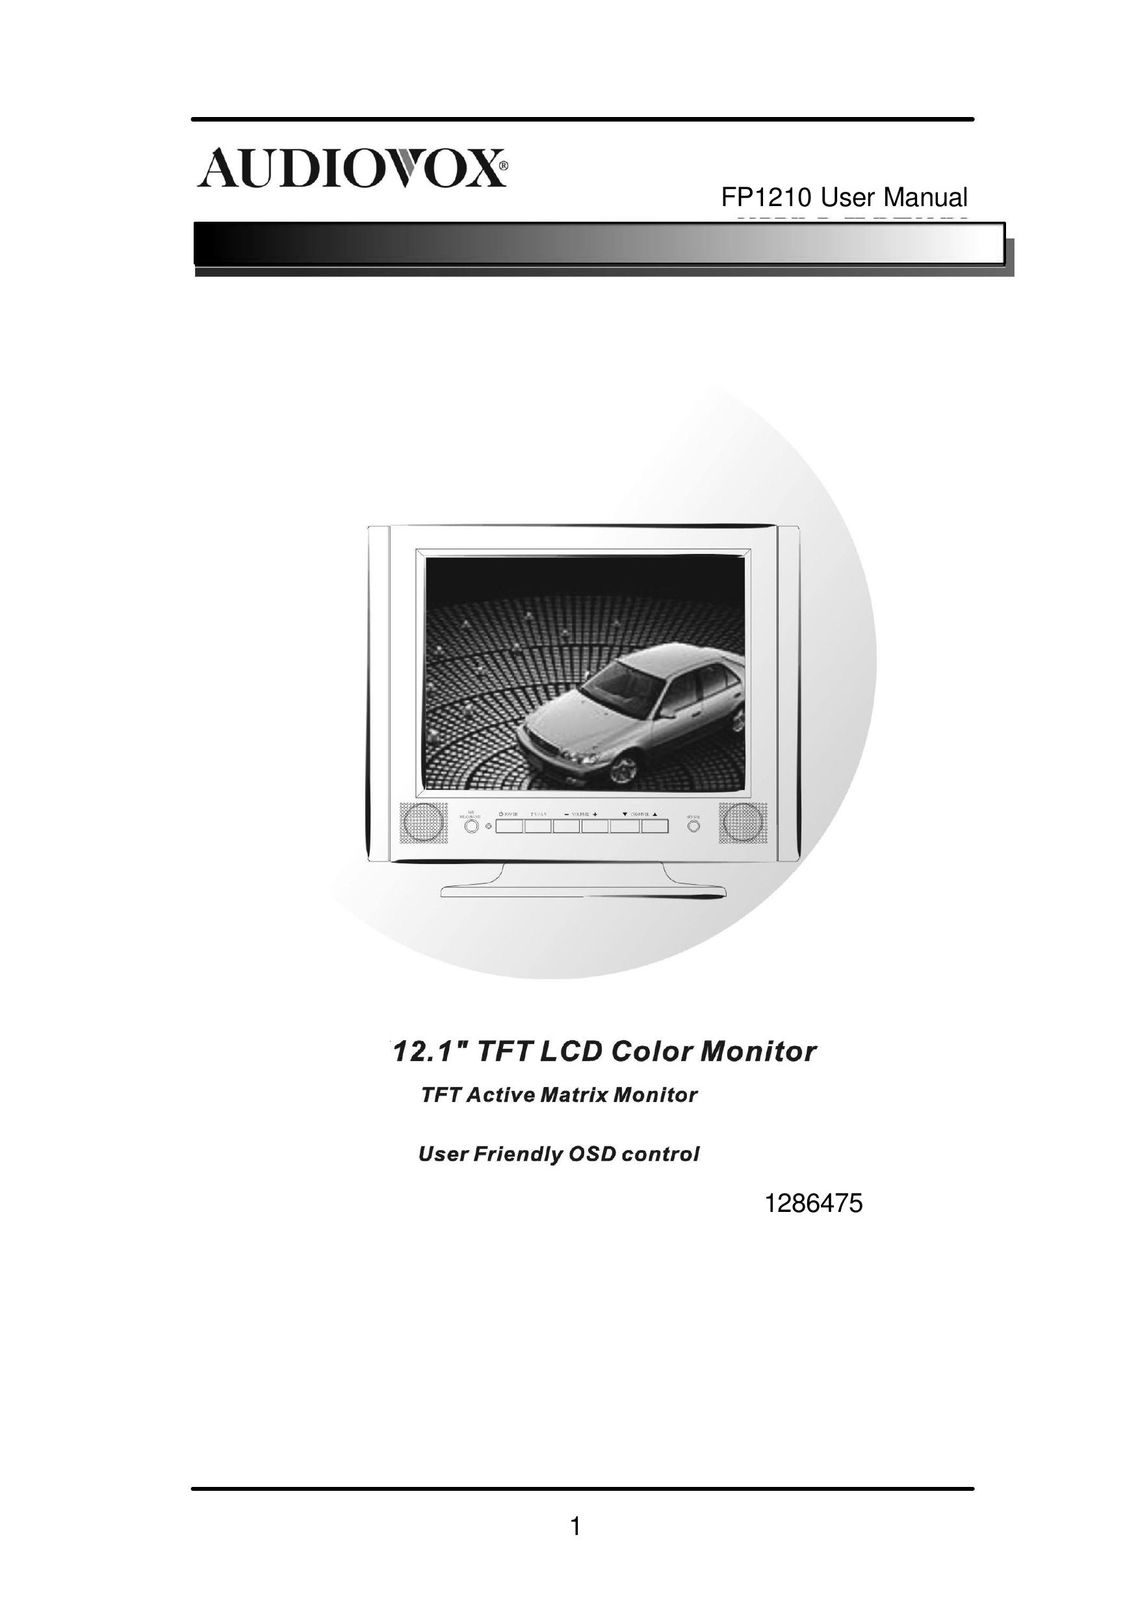 Audiovox FP1210 Car Video System User Manual